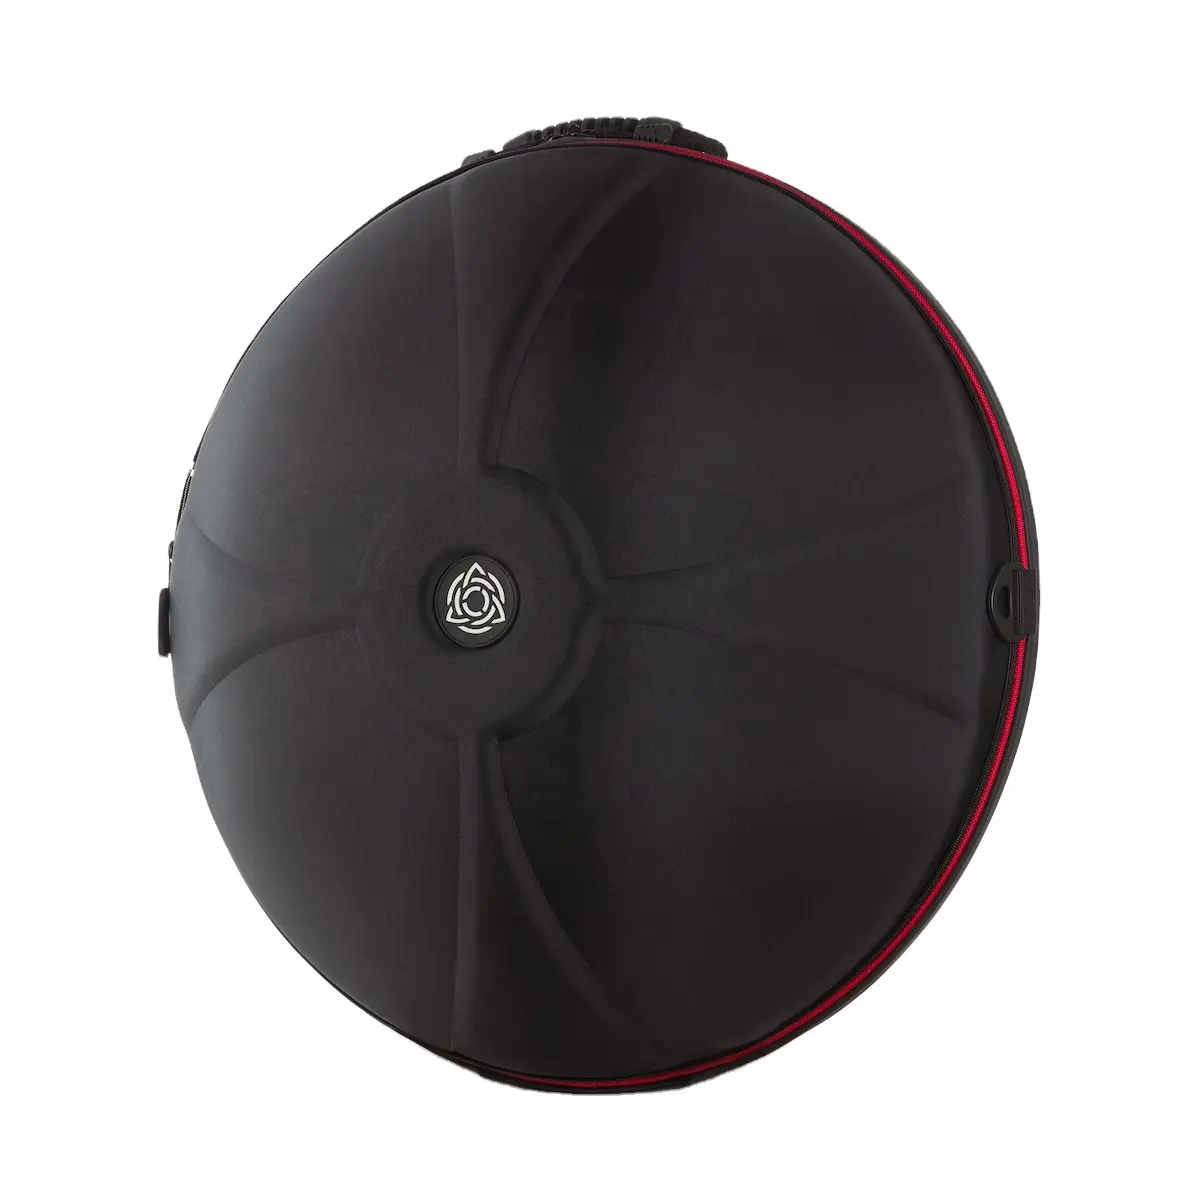 Waterproof Multi-color Optional Simple And Portable Creative Evatek Hang Drum Set Bag For Steel Tongue Drum